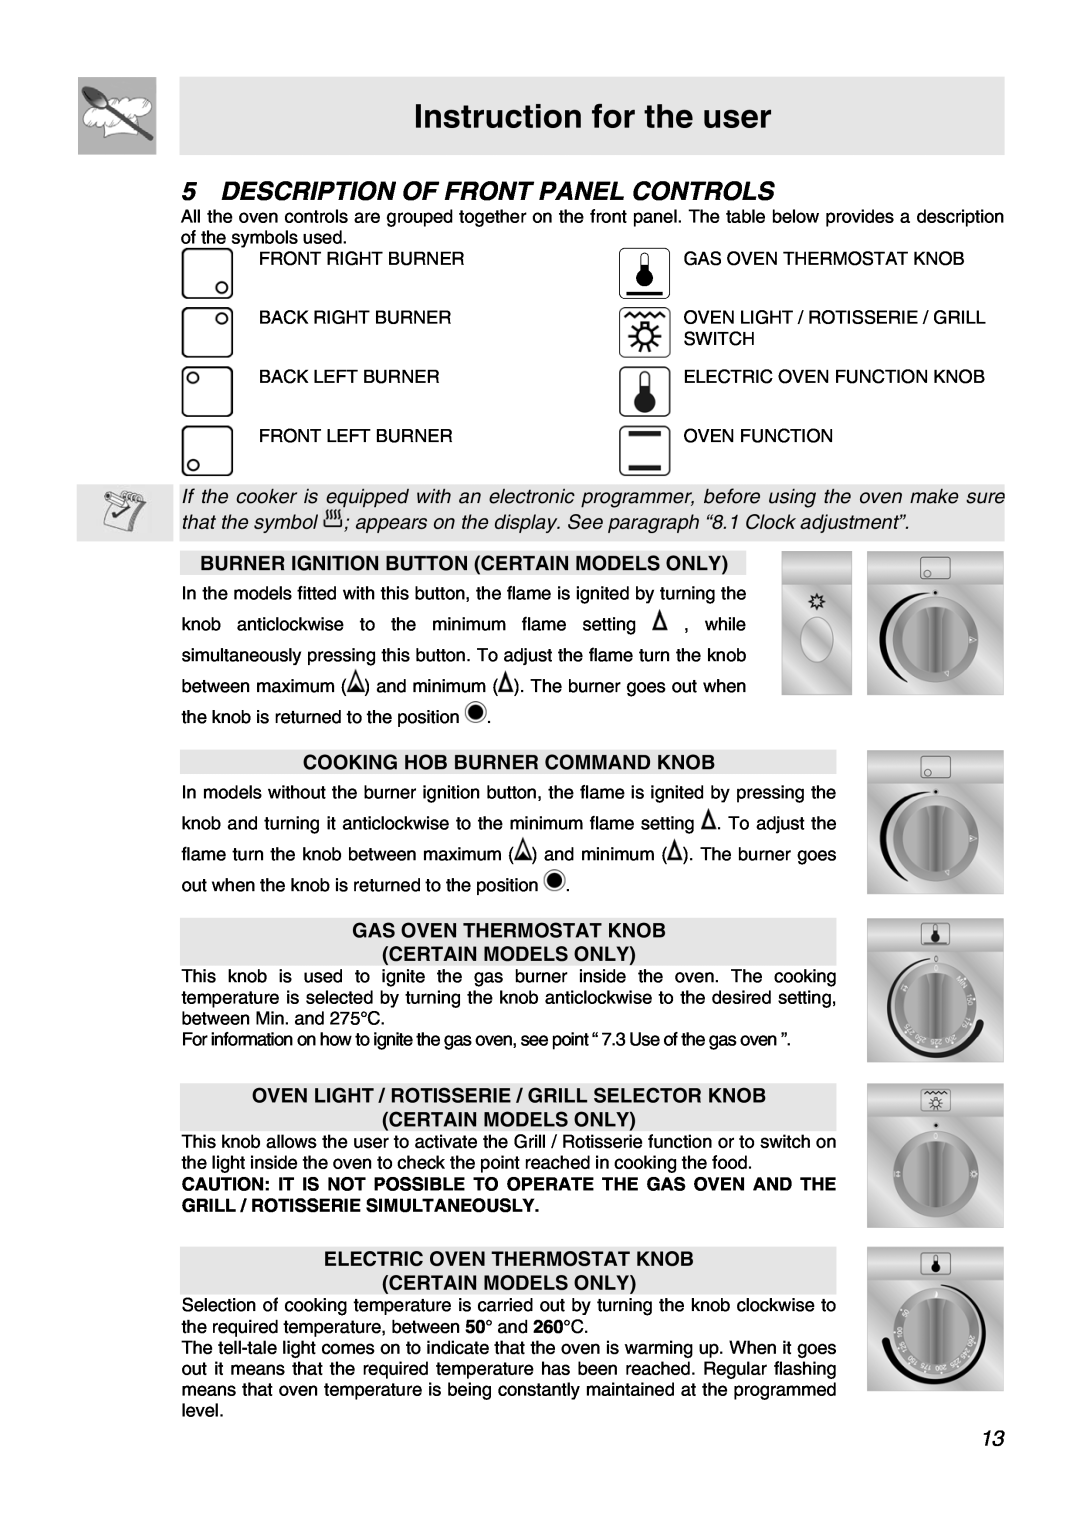 Smeg APC61XVG Instruction for the user, Description Of Front Panel Controls, Burner Ignition Button Certain Models Only 